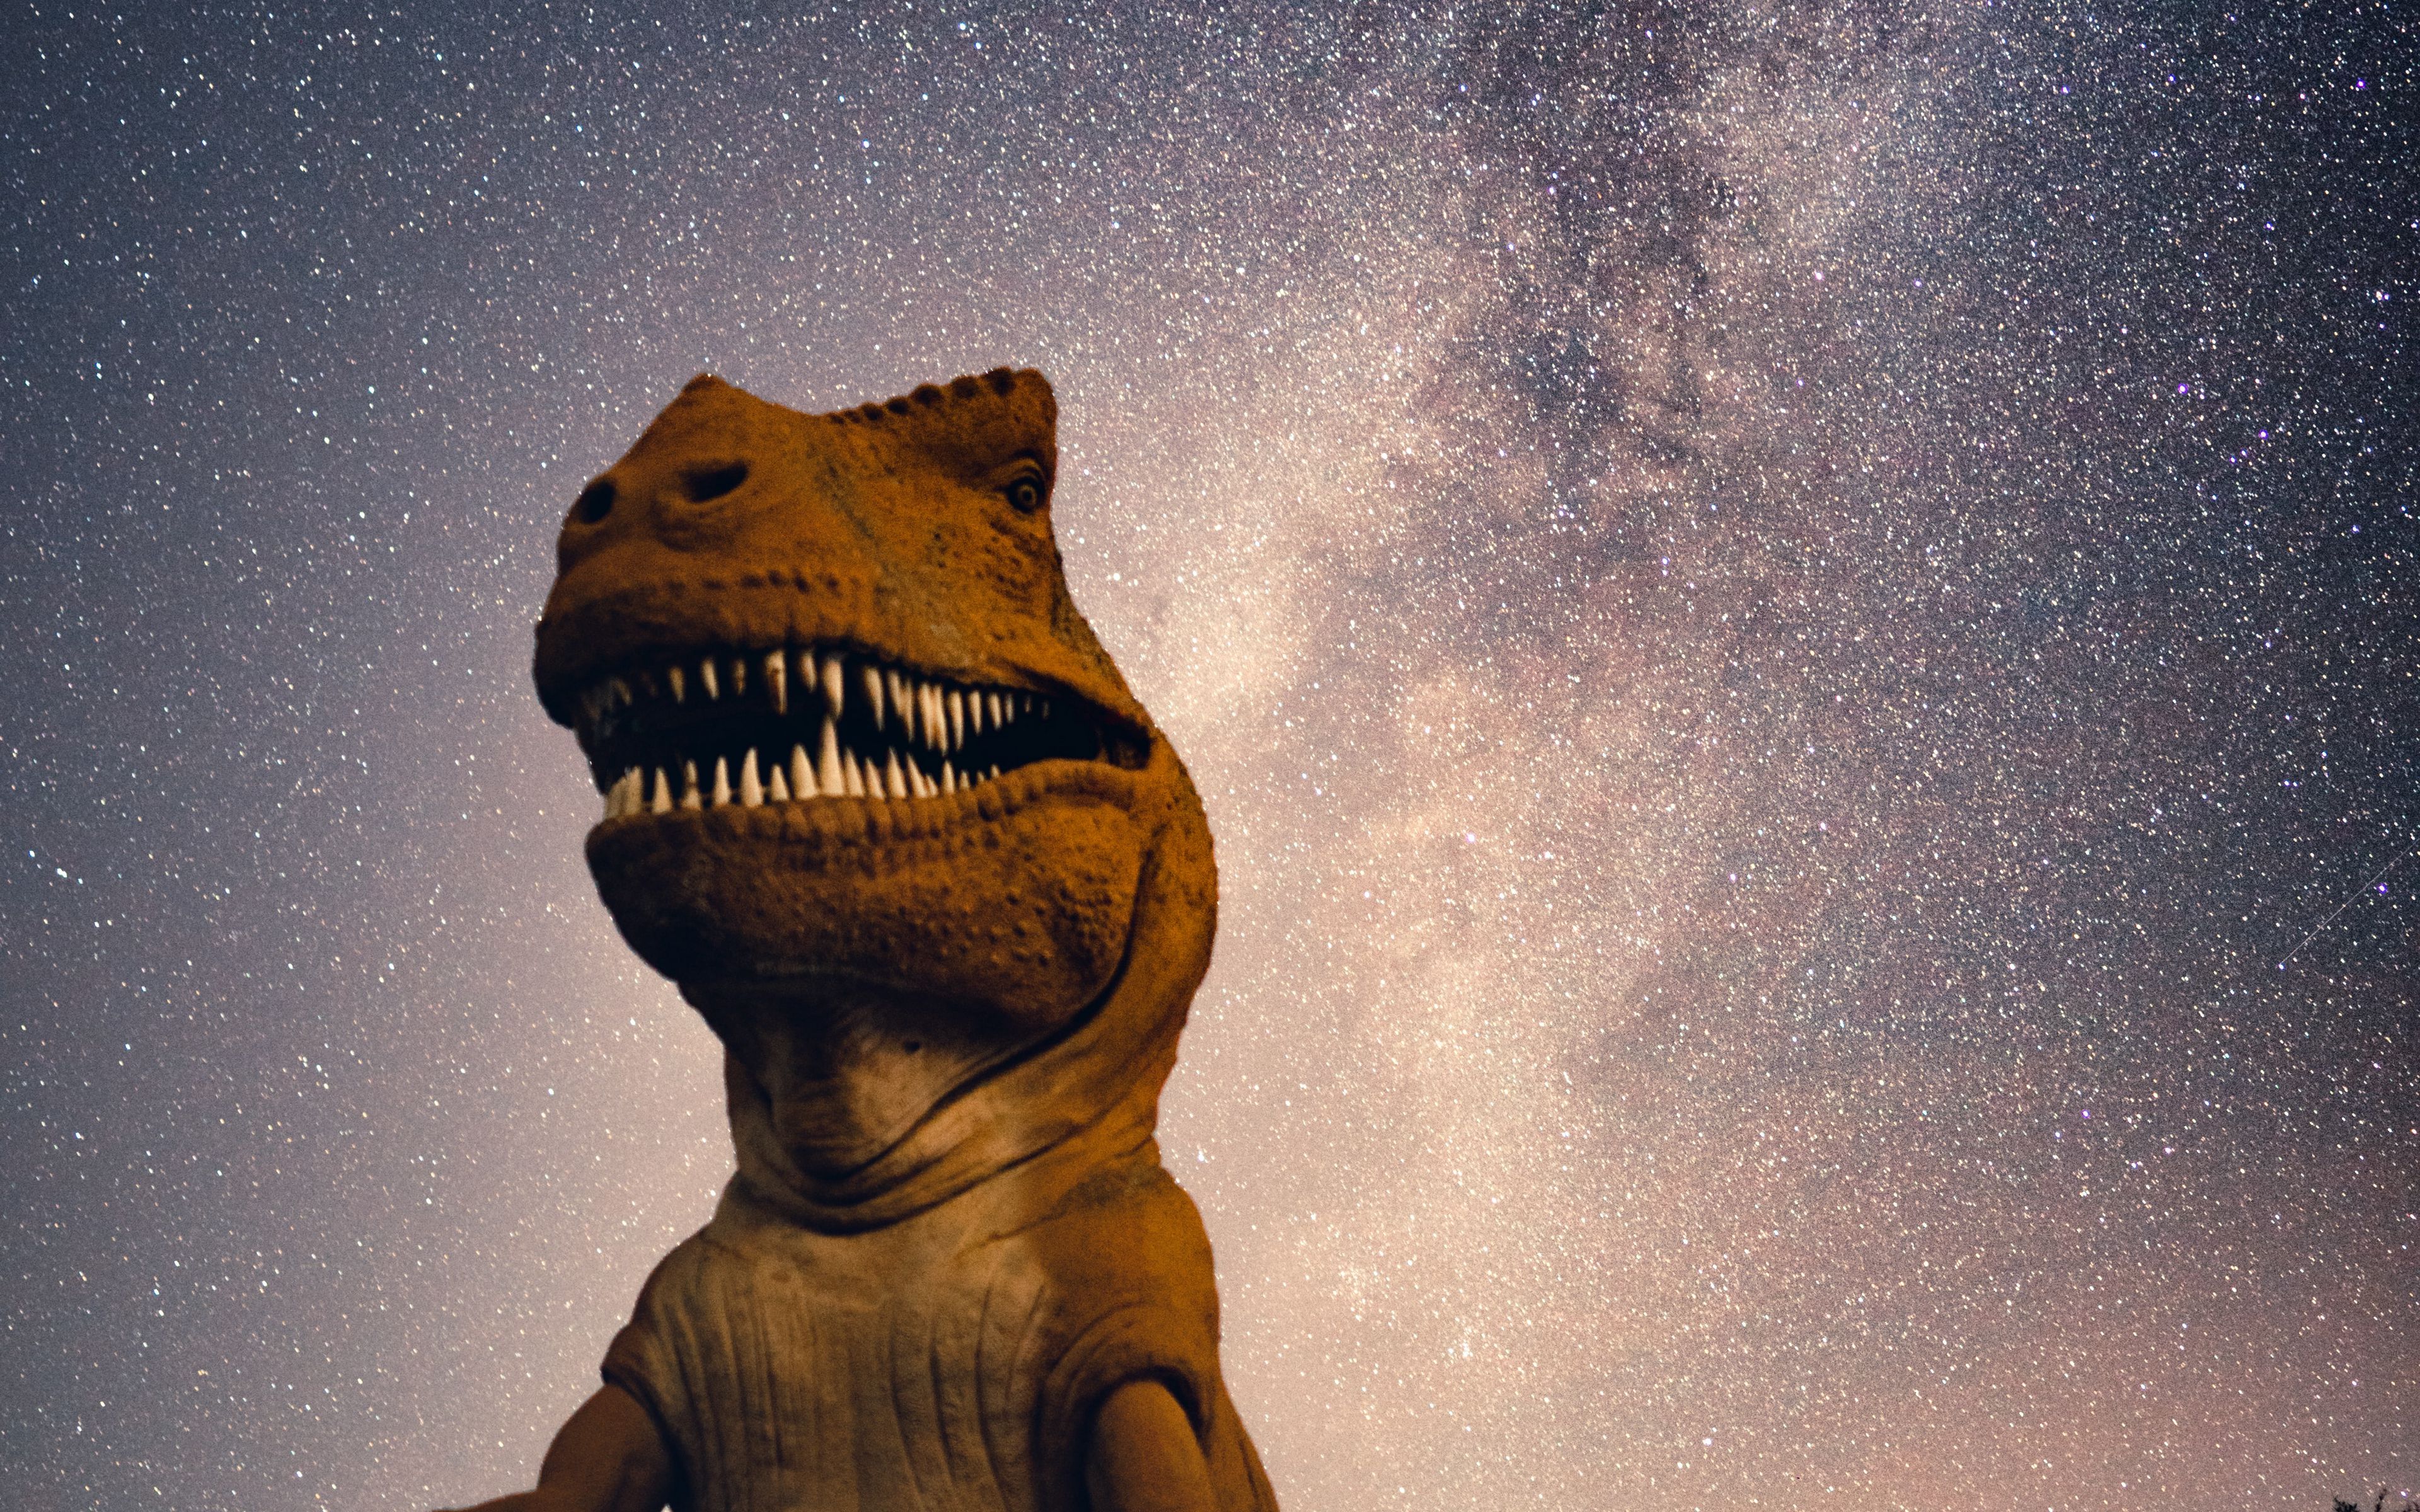 Top 999+ Cute Dinosaur Wallpaper Full HD, 4K✓Free to Use